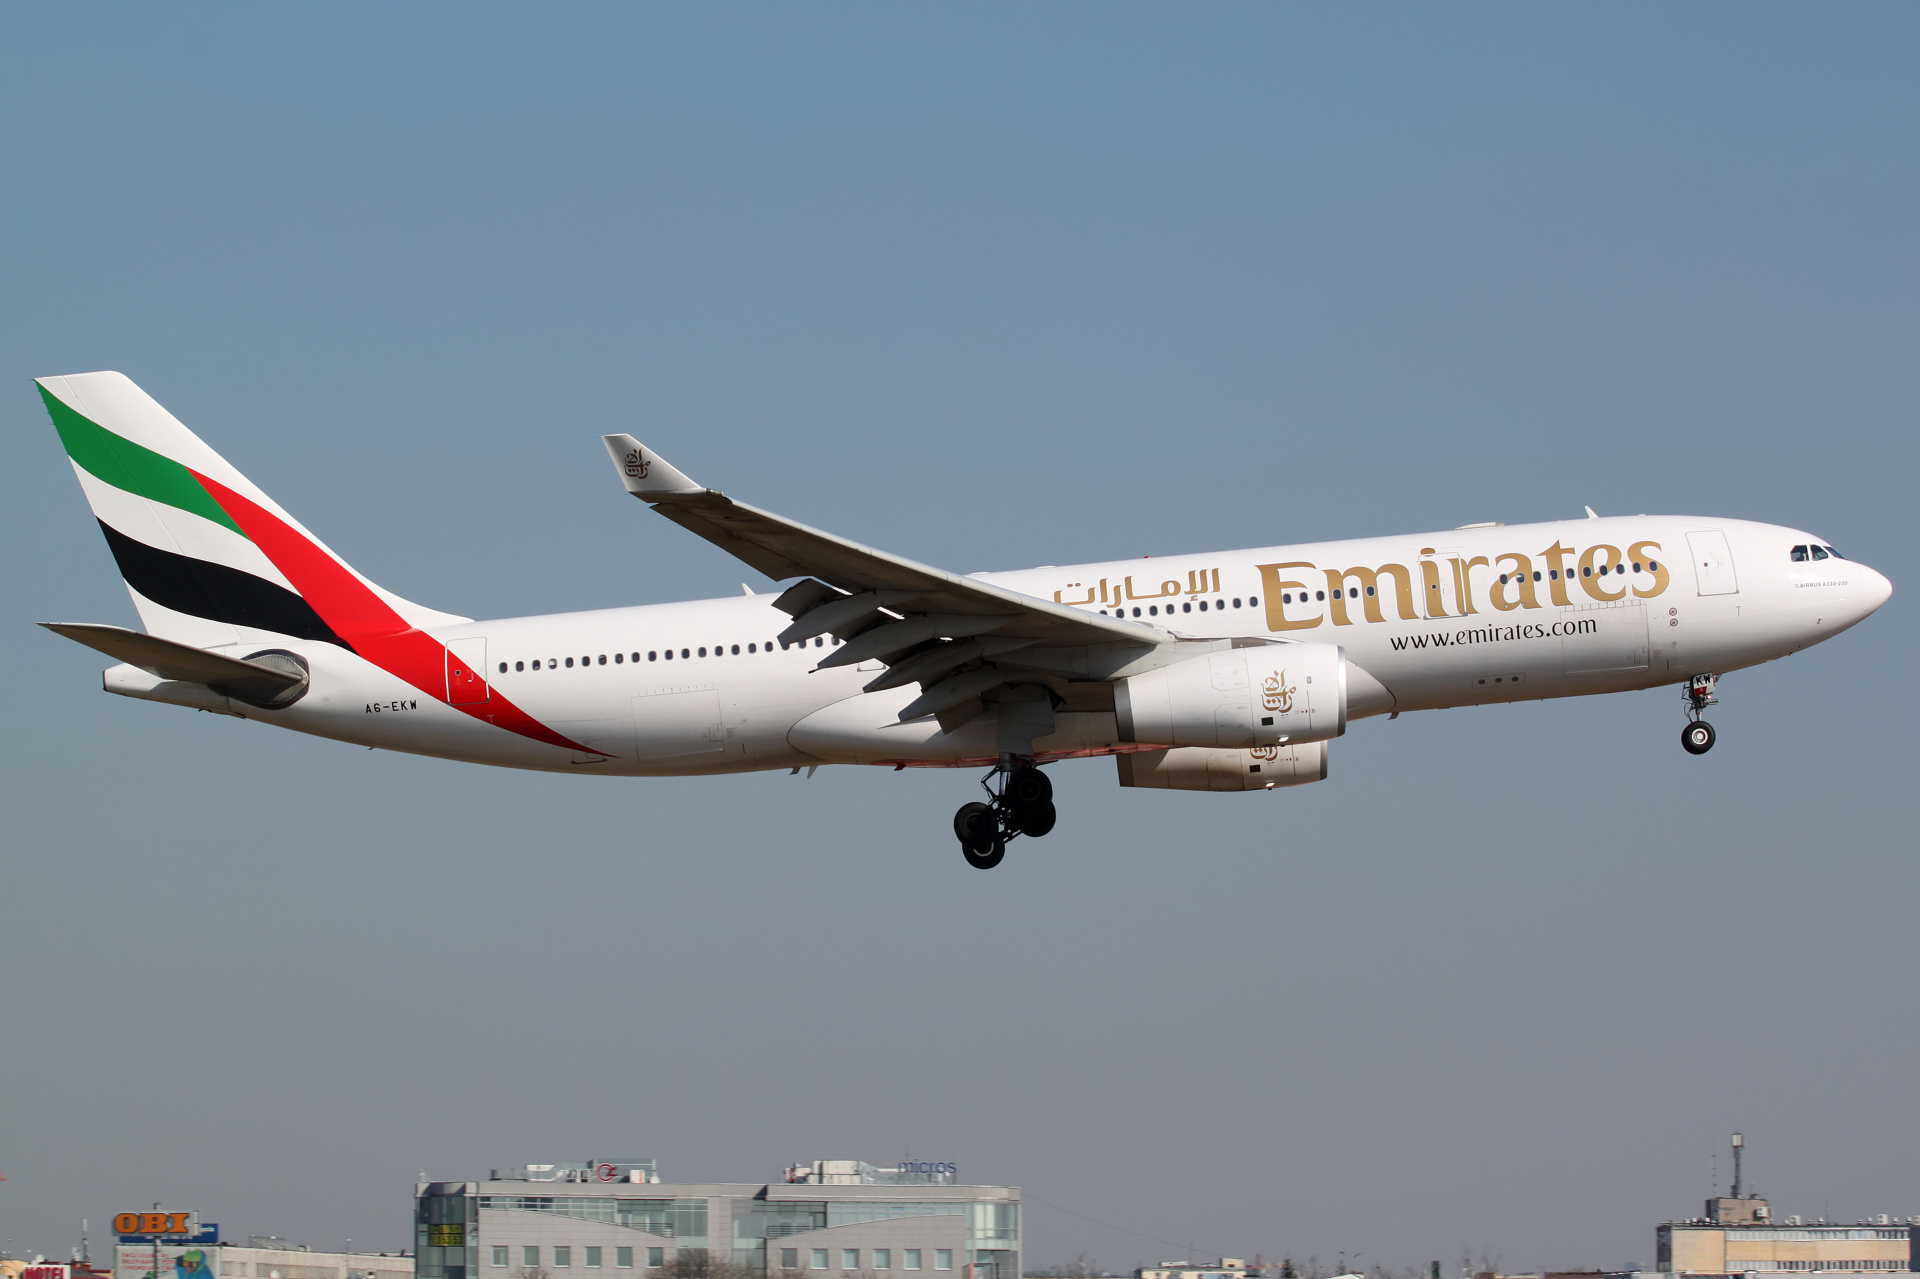 A6-EKW (Aircraft » EPWA Spotting » Airbus A330-200 » Emirates)